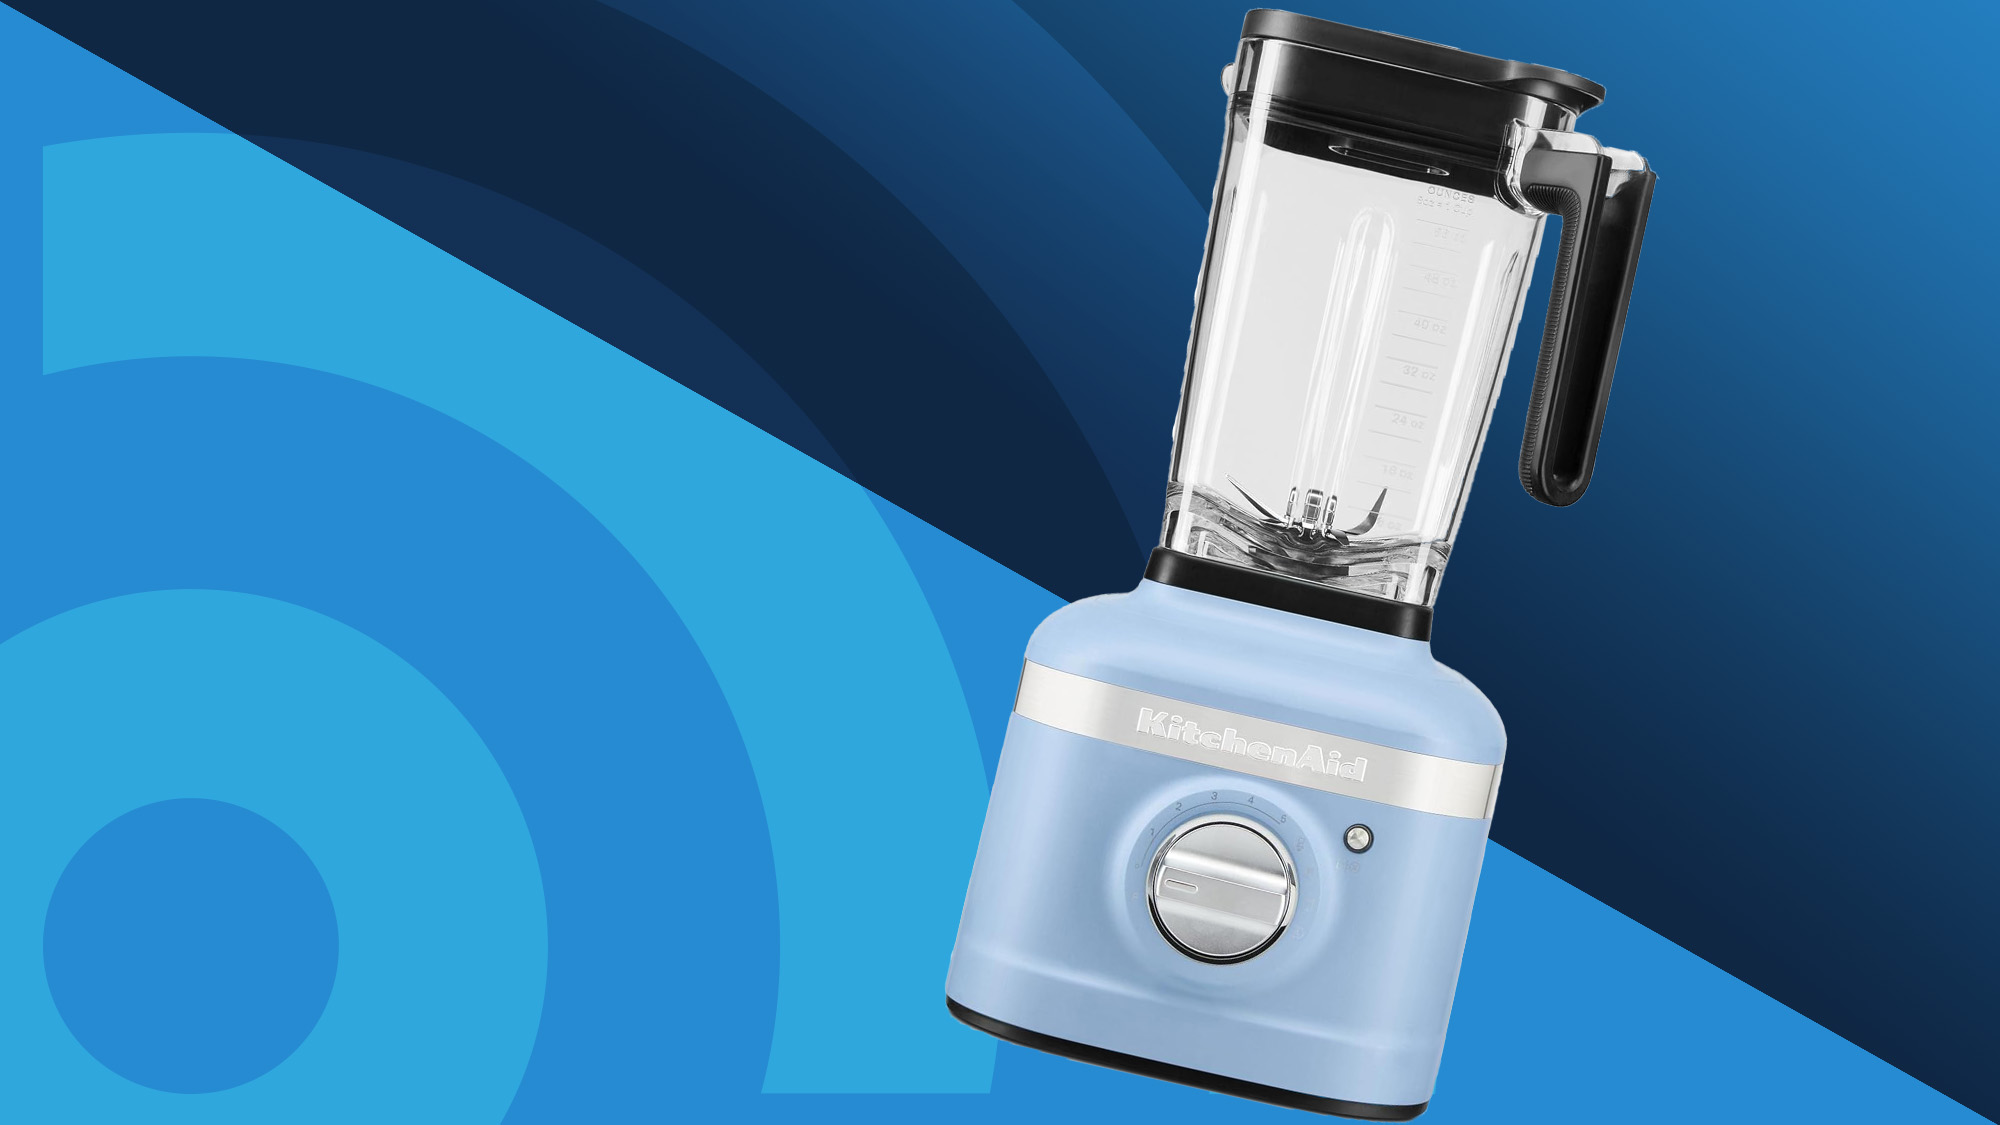 Brand new Ninja 2.1L blender pitcher, TV & Home Appliances